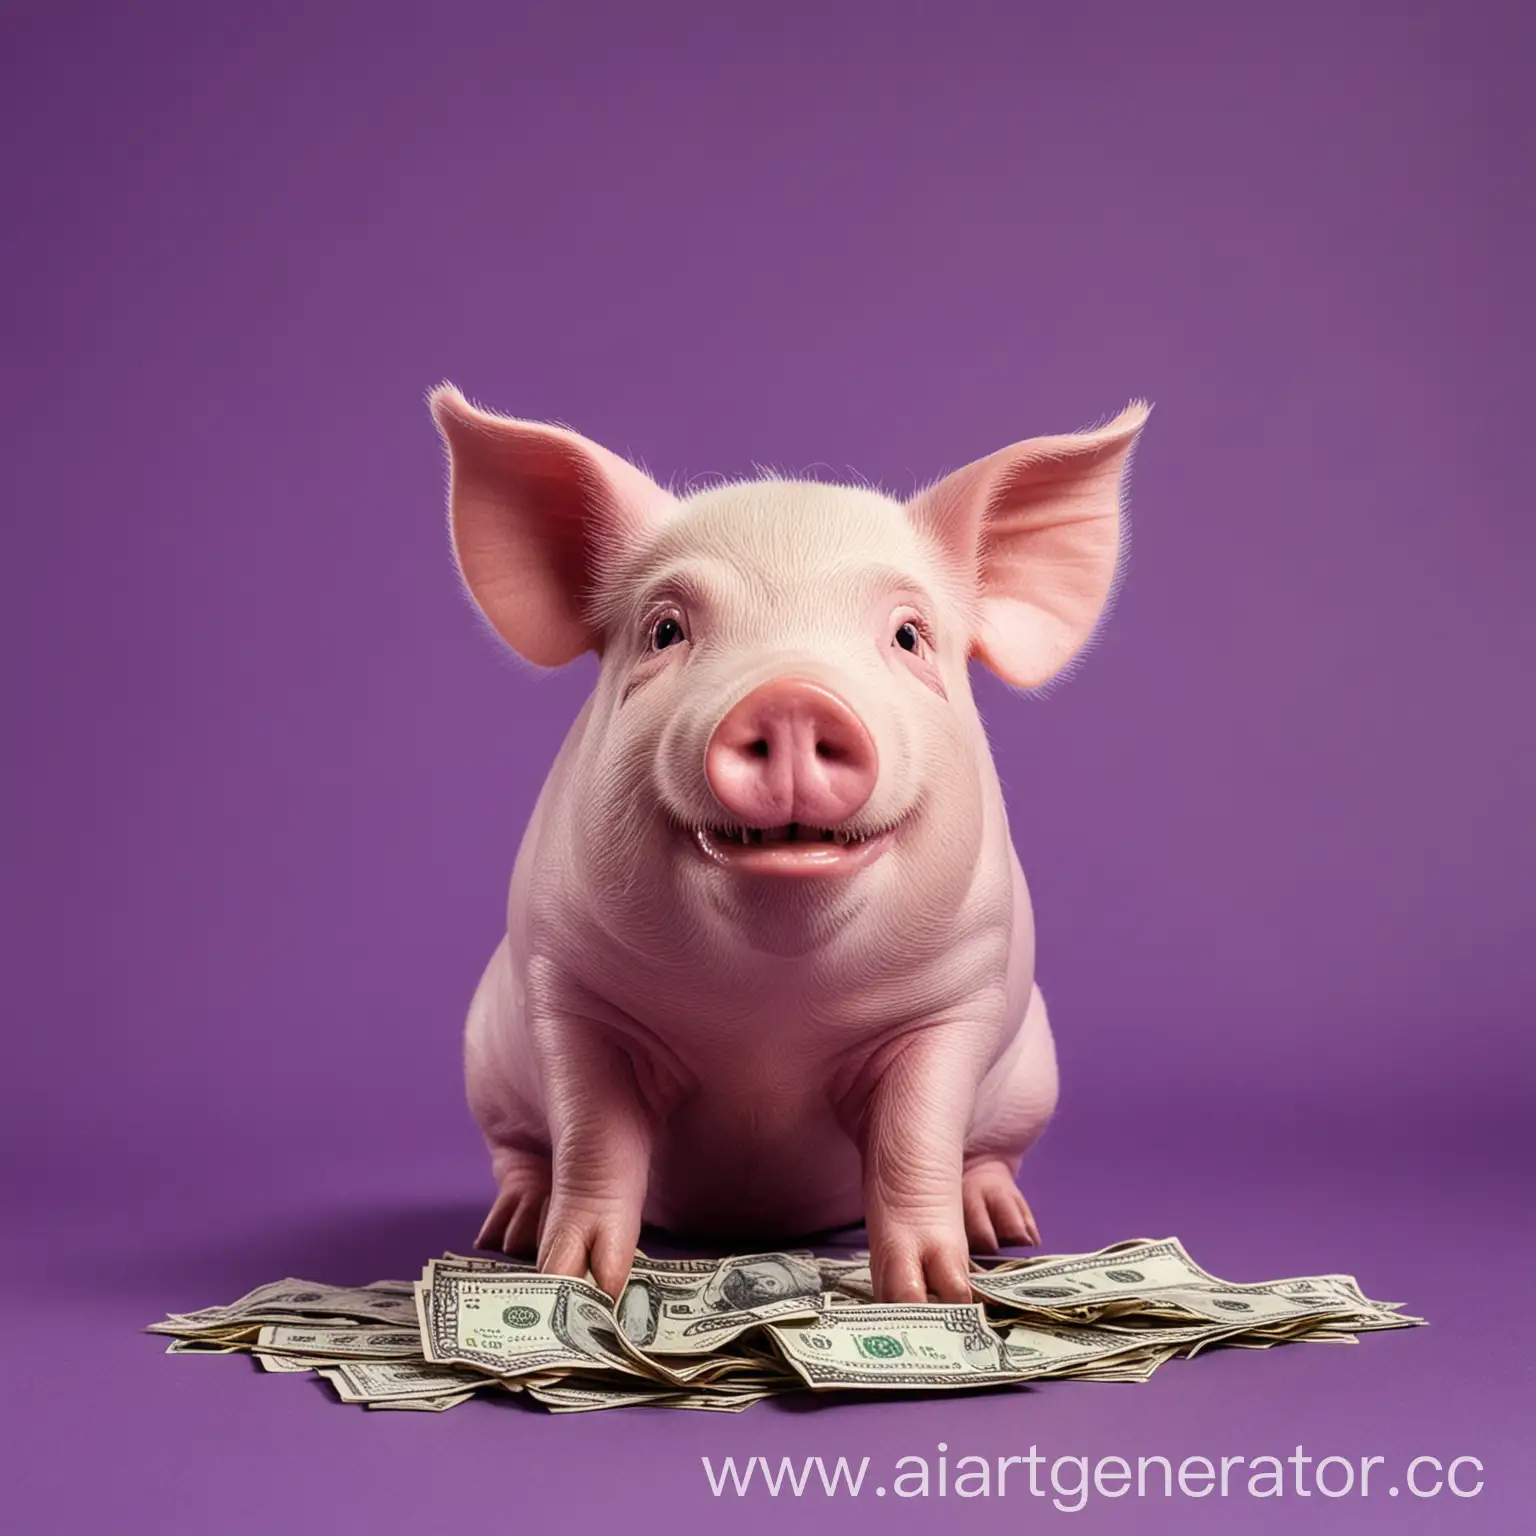 Funny-Money-Pig-Eating-Dollars-on-Vibrant-Purple-Background